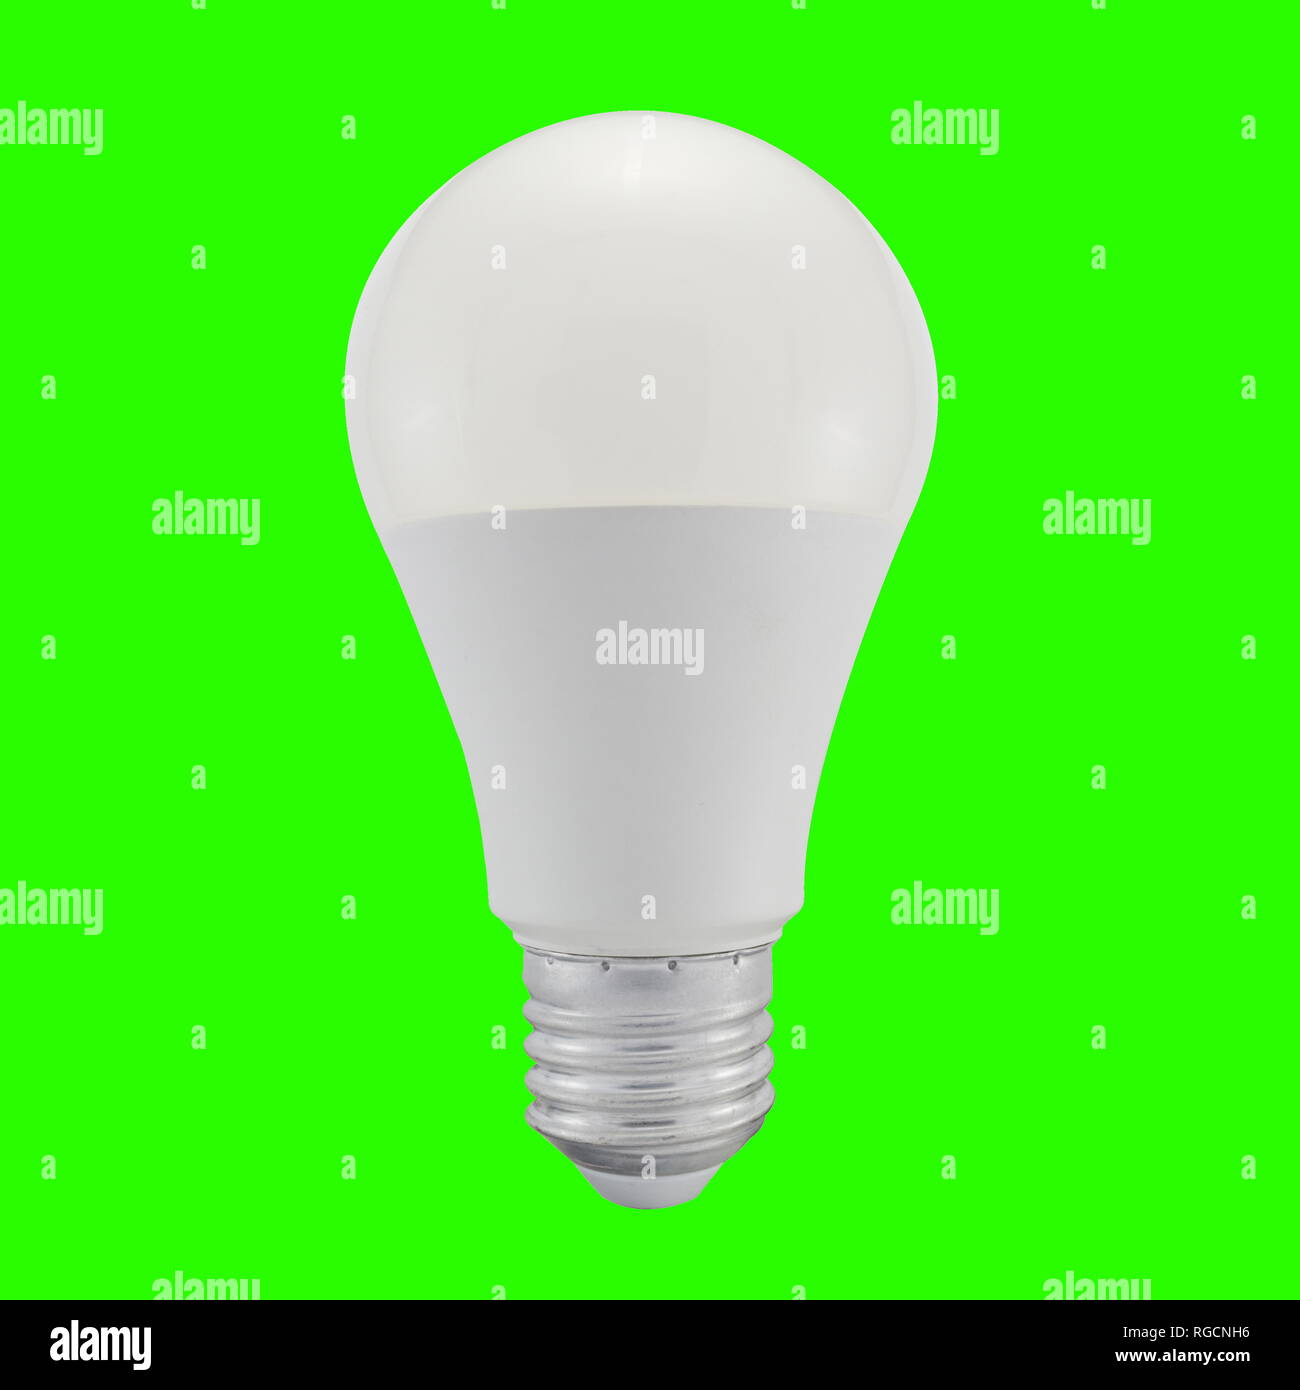 LED light bulb isolated on green background. Stock Photo